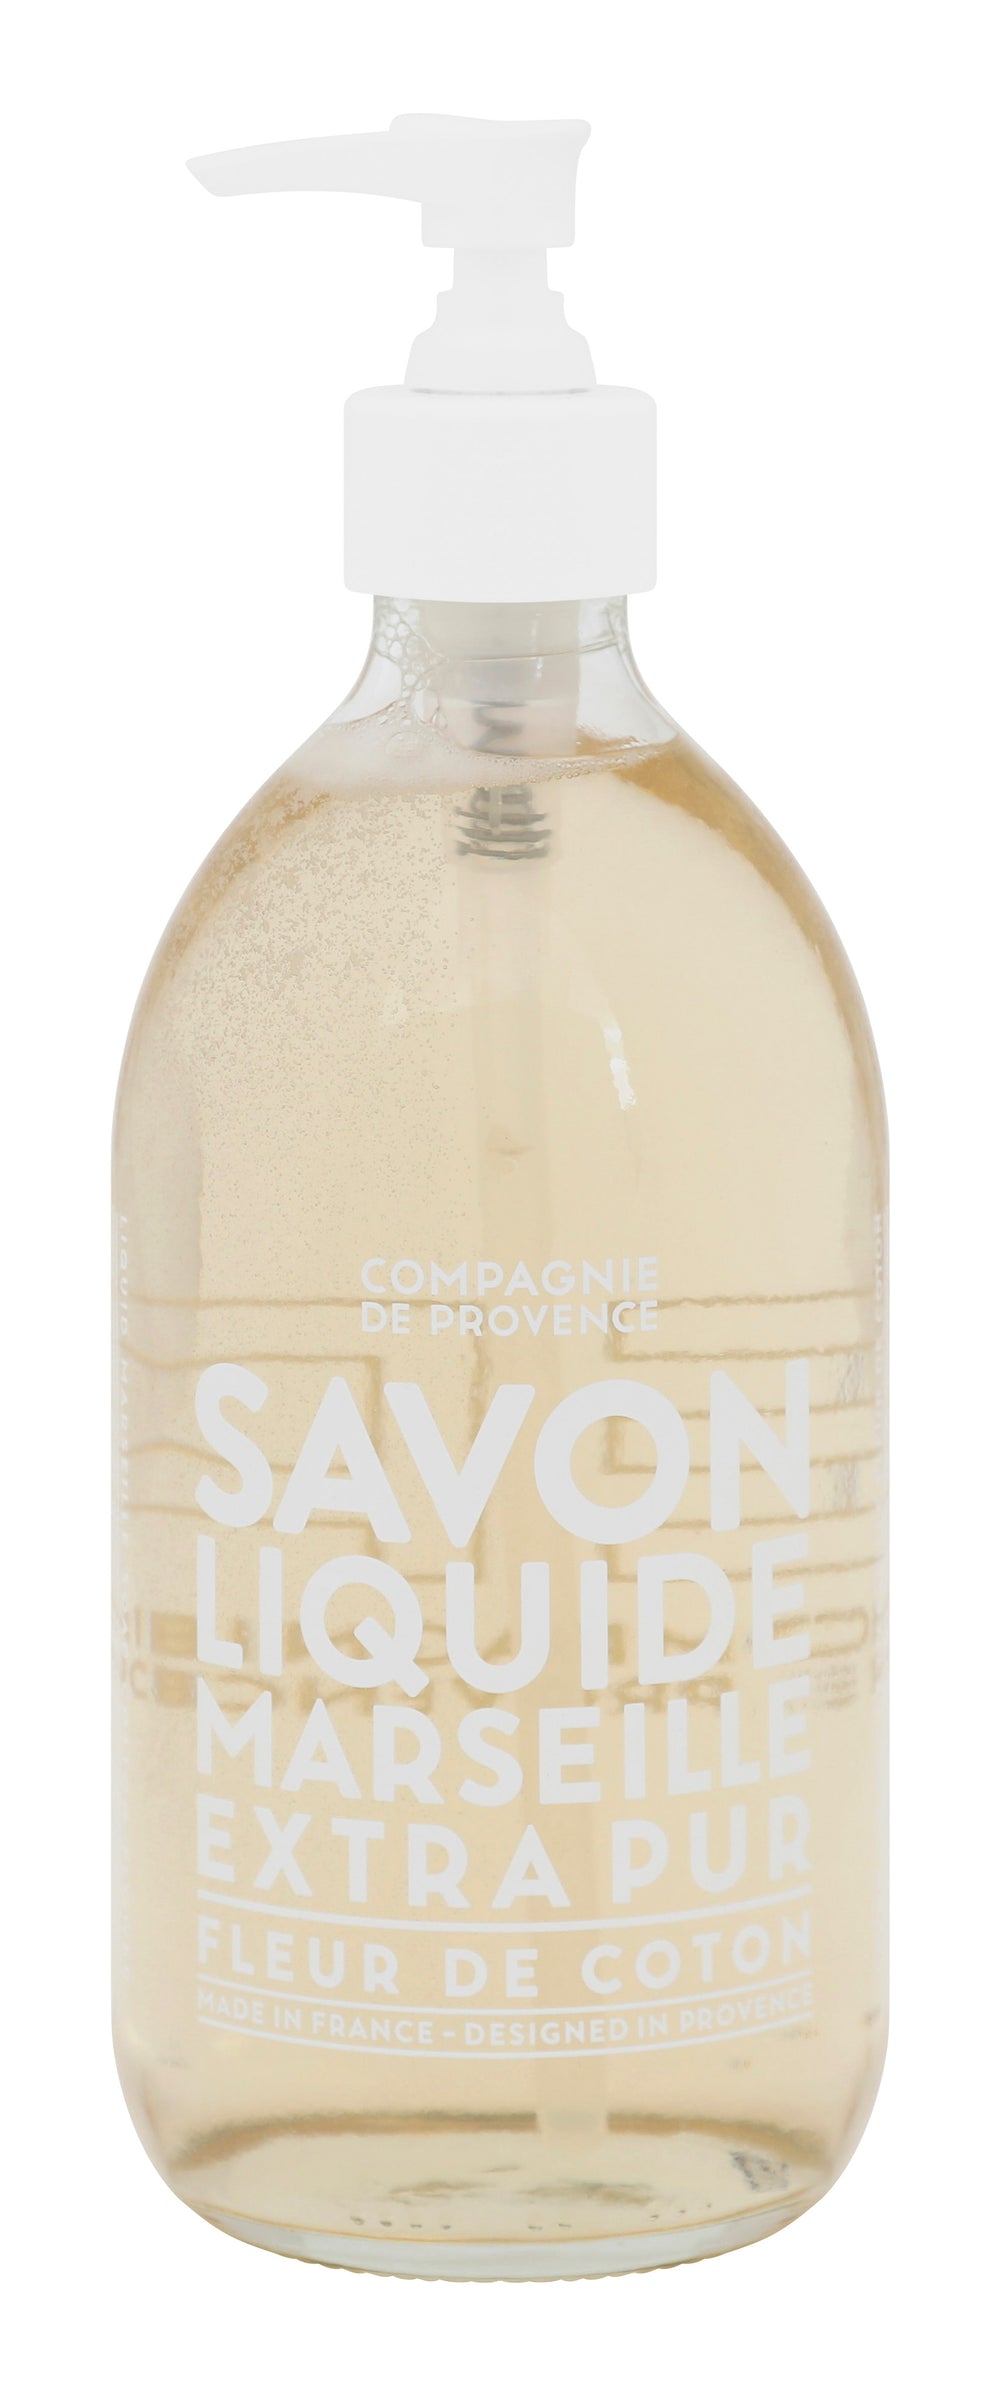 Compagnie De Provence Liquid Soaps